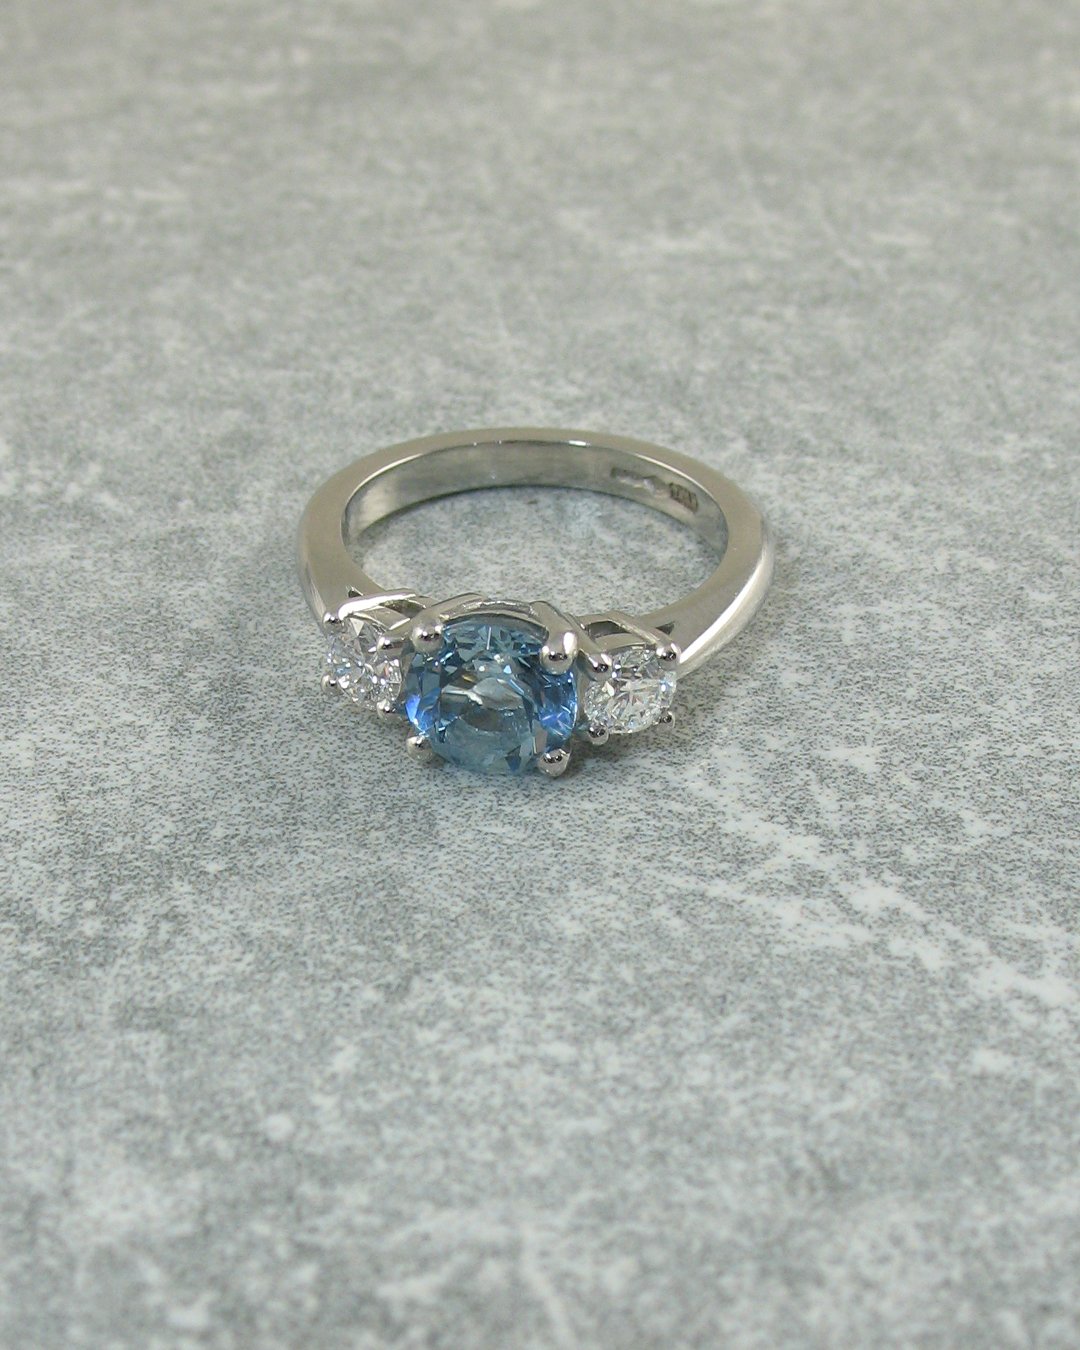 A bright and beautiful three stone aquamarine ring